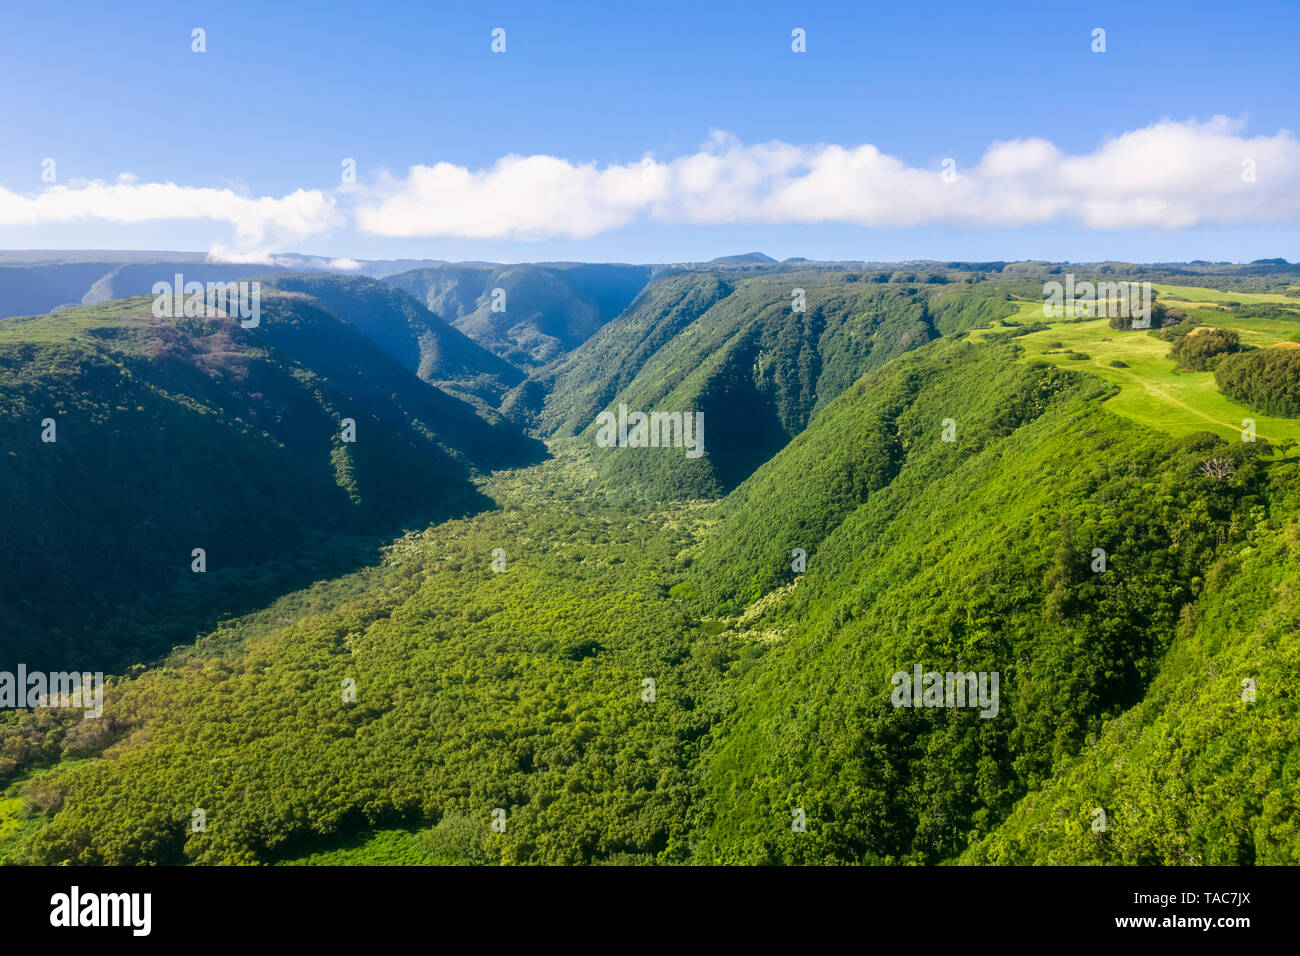 USA, Hawaii, Big Island, la Vallée de Pololu, vue aérienne Banque D'Images